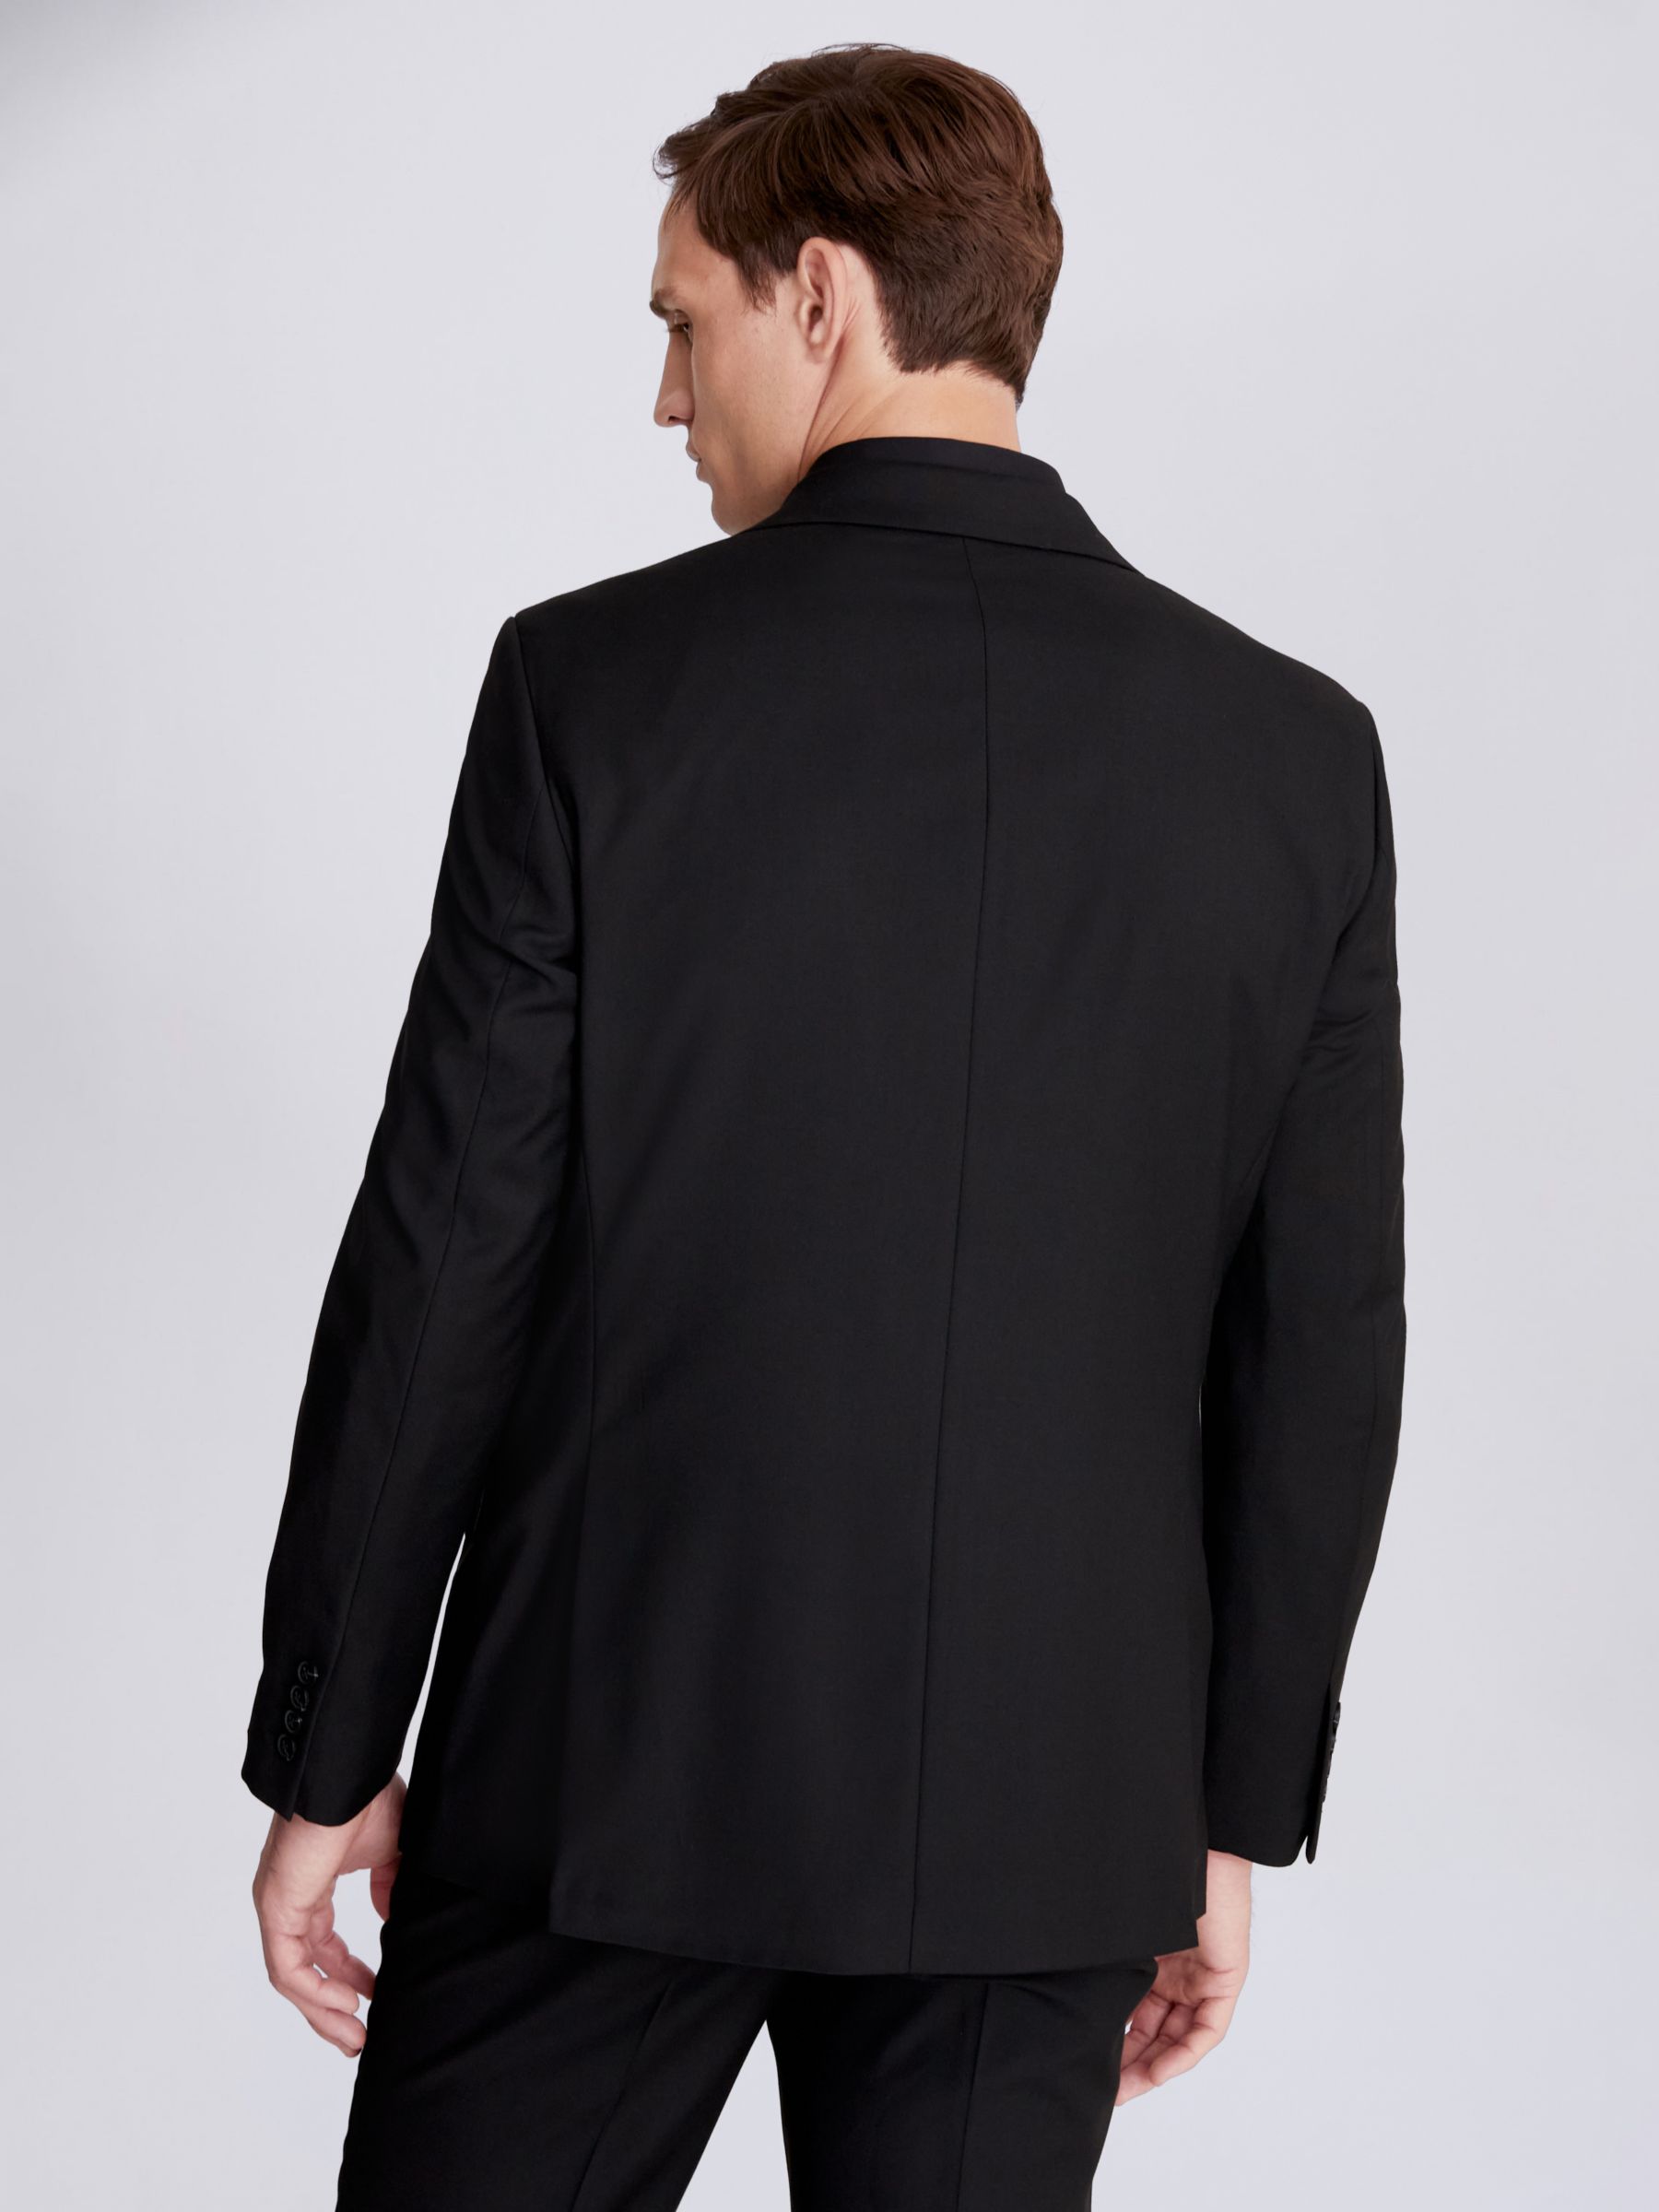 Moss Regular Fit Stretch Suit Jacket, Black, 34S